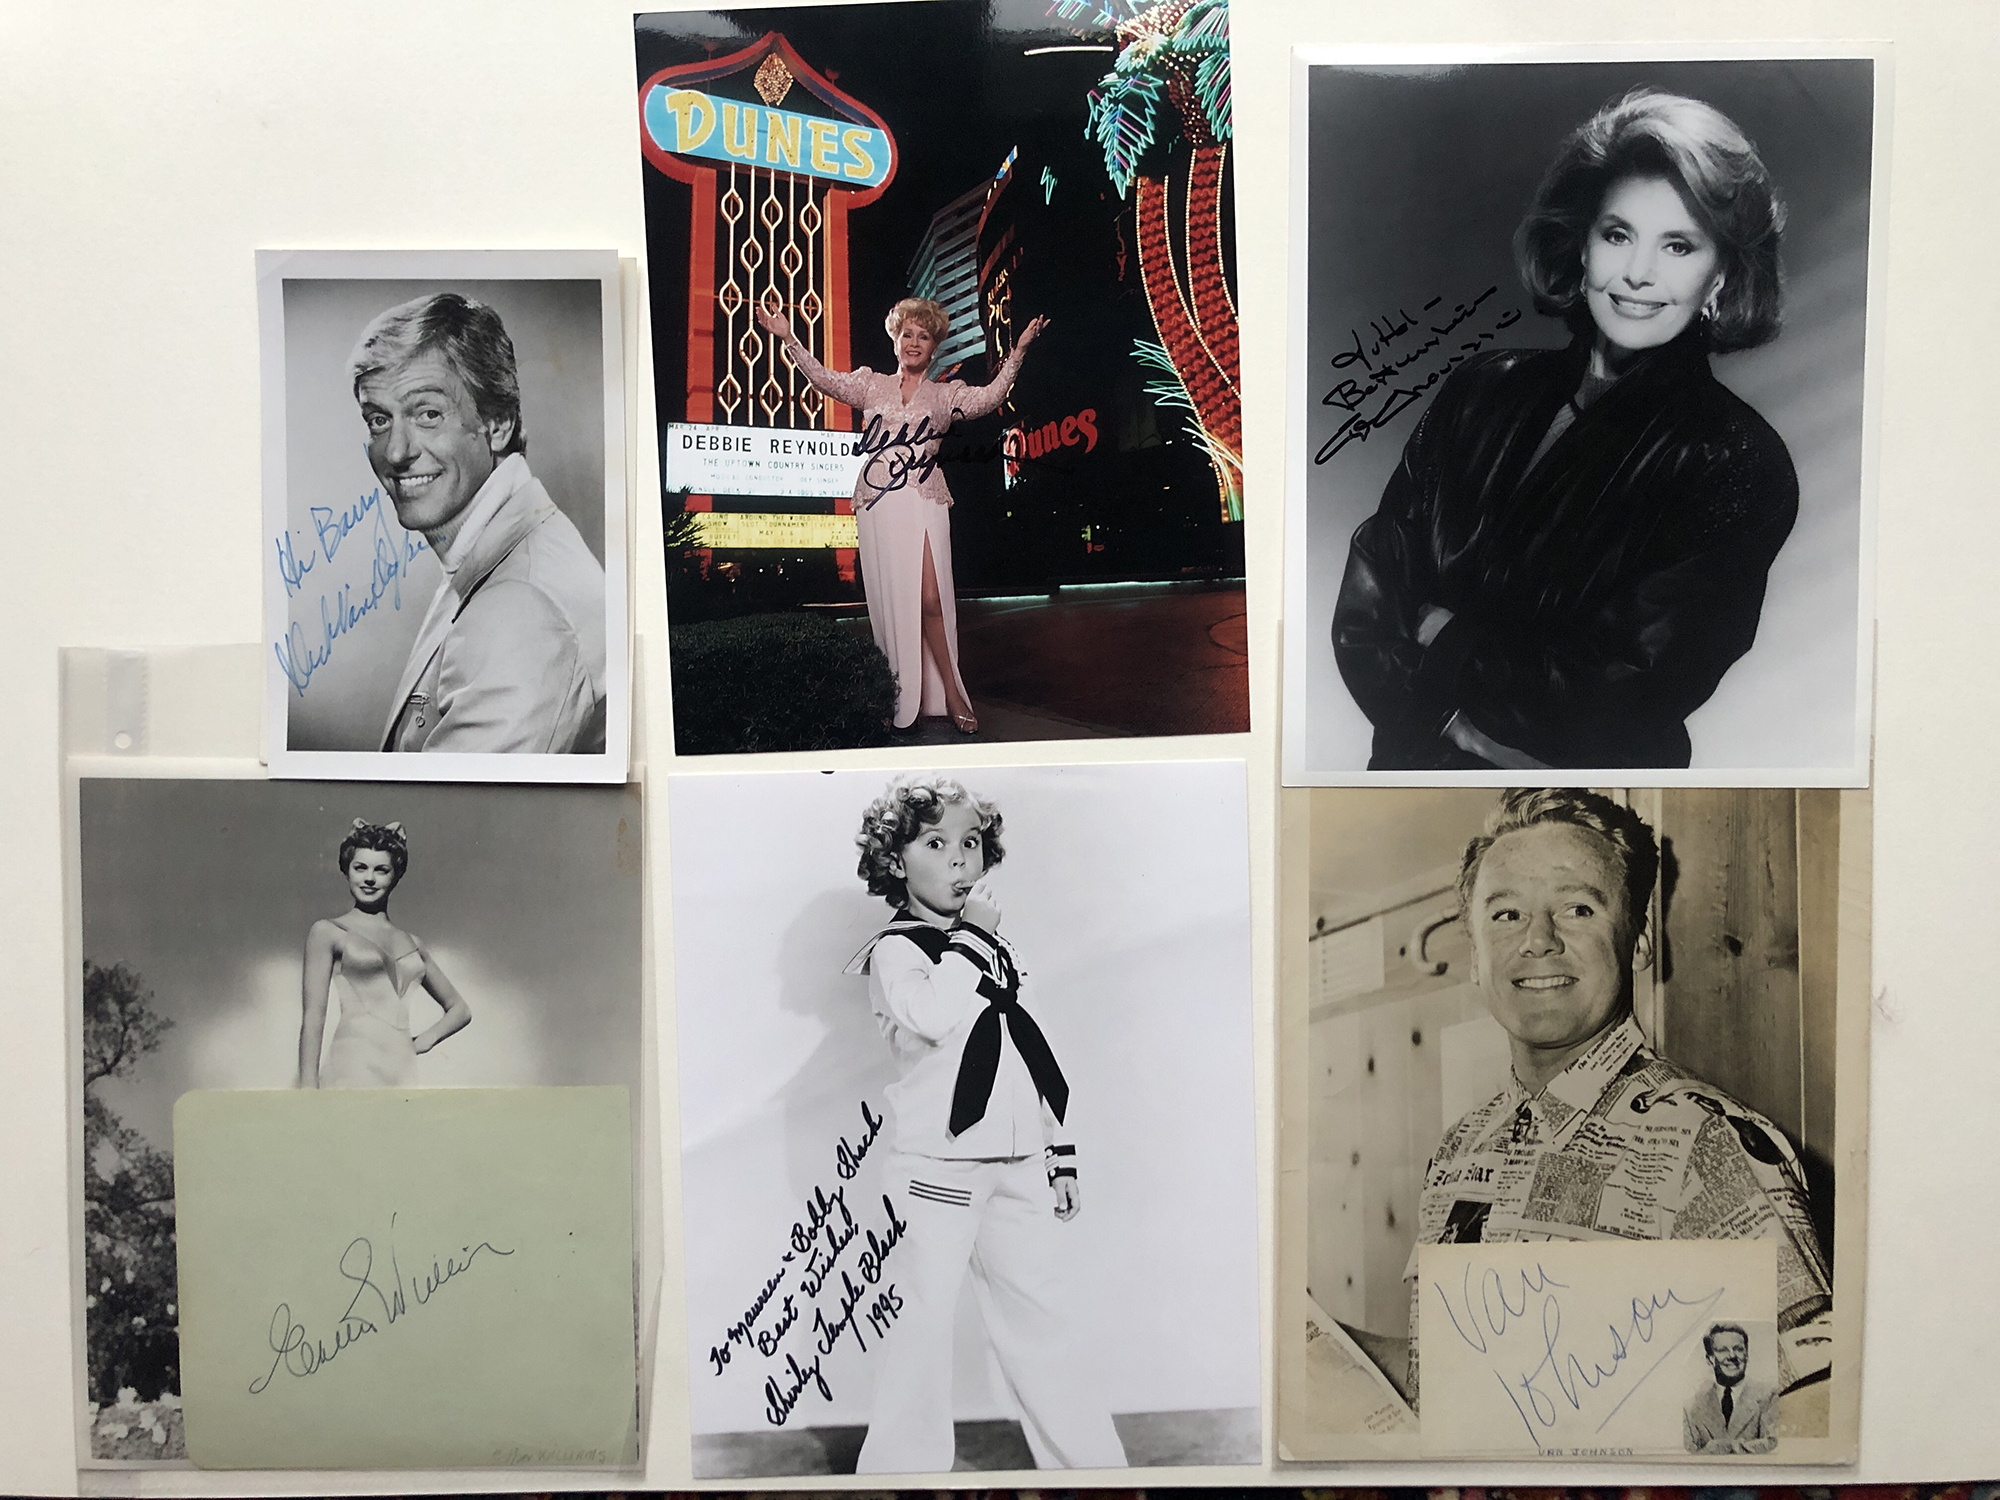 MUSICAL; Dick Van Dyke, Doris Day, Shirley Temple, Cyd Charisse, Debbie Reynolds & more